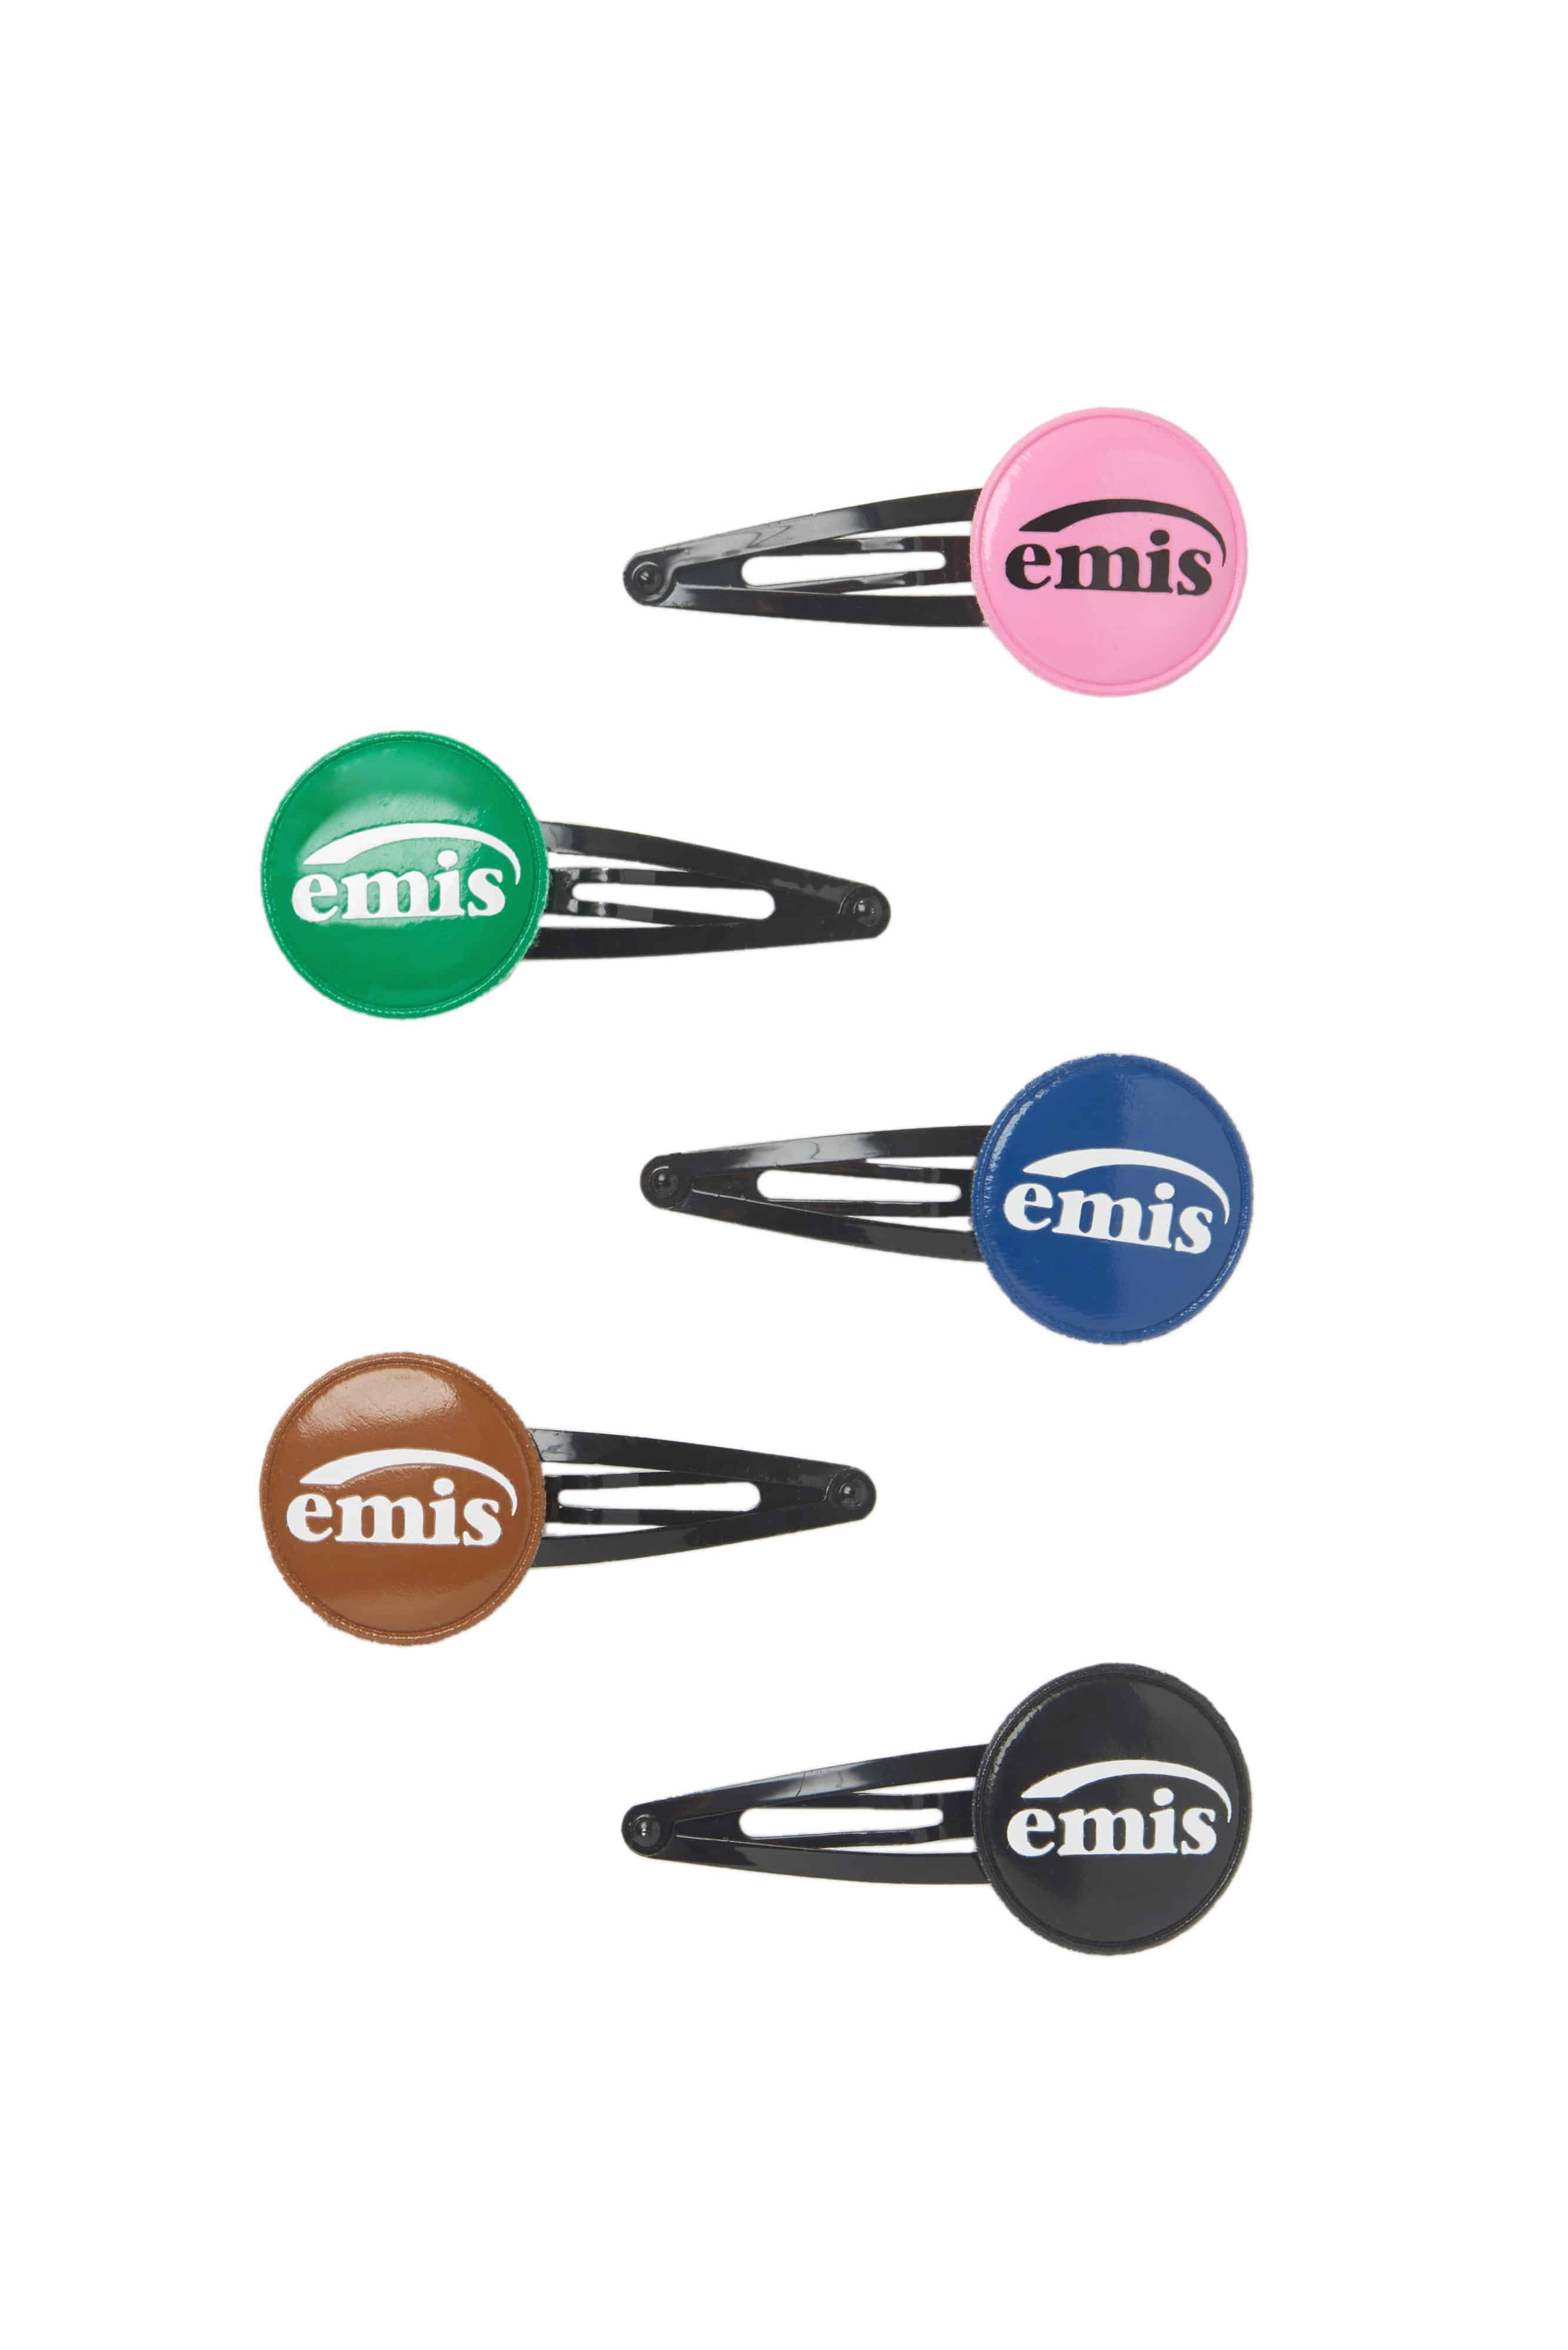 韓國EMIS - ENAMEL CIRCLE HAIRPIN 琺瑯圓髮夾